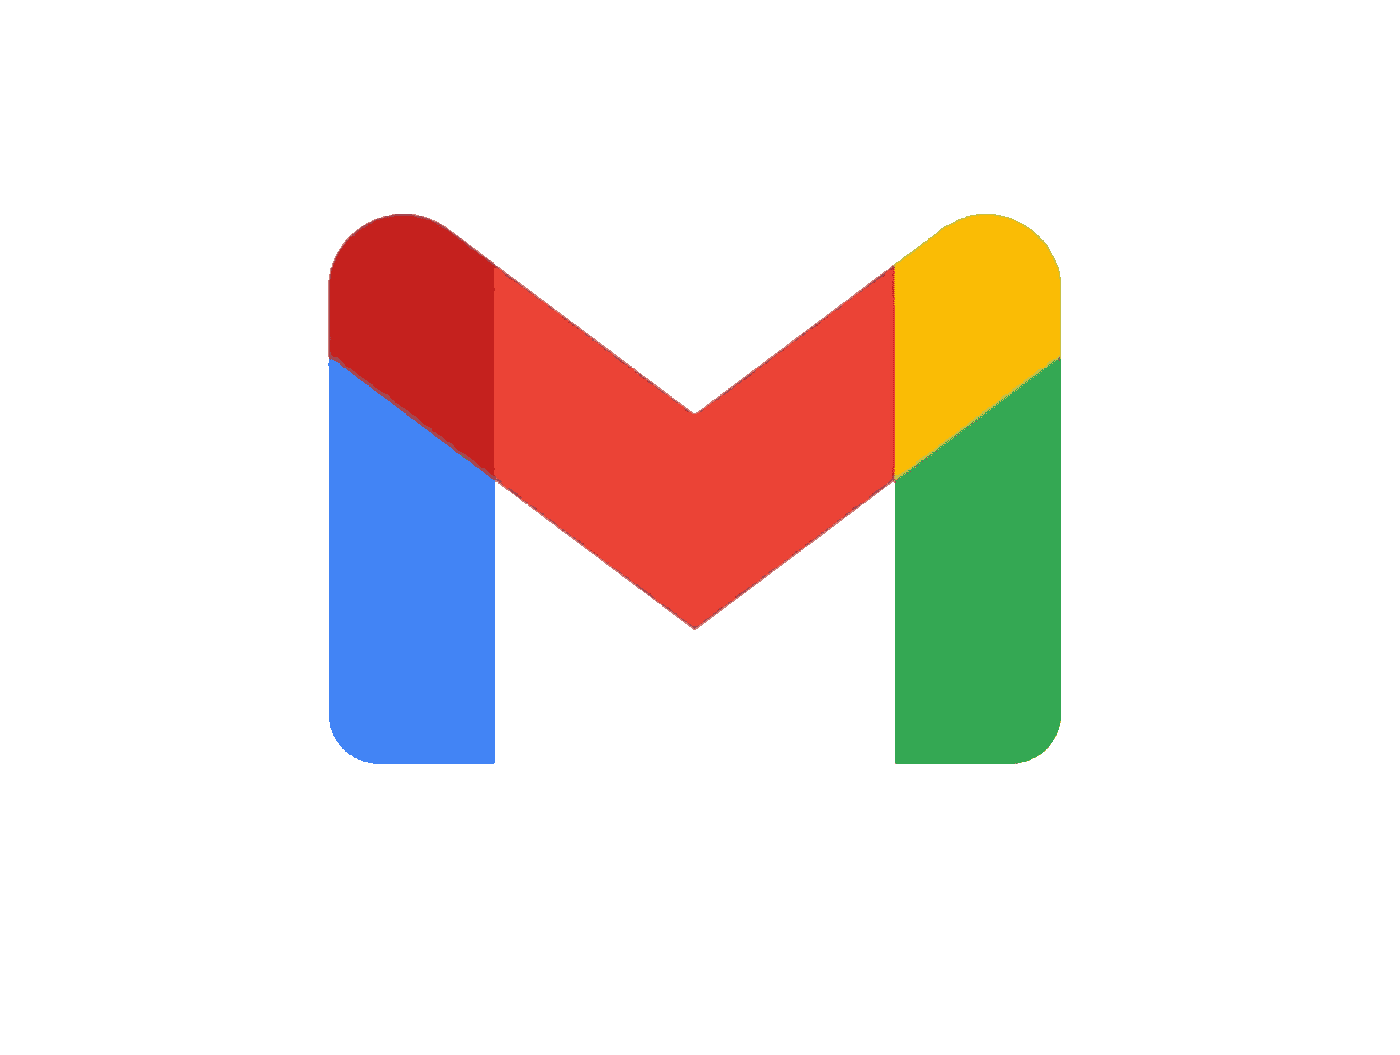 L gmail com. Иконка гмейл. Gmail логотип. Значок гугл почты. Gmail значок приложения.